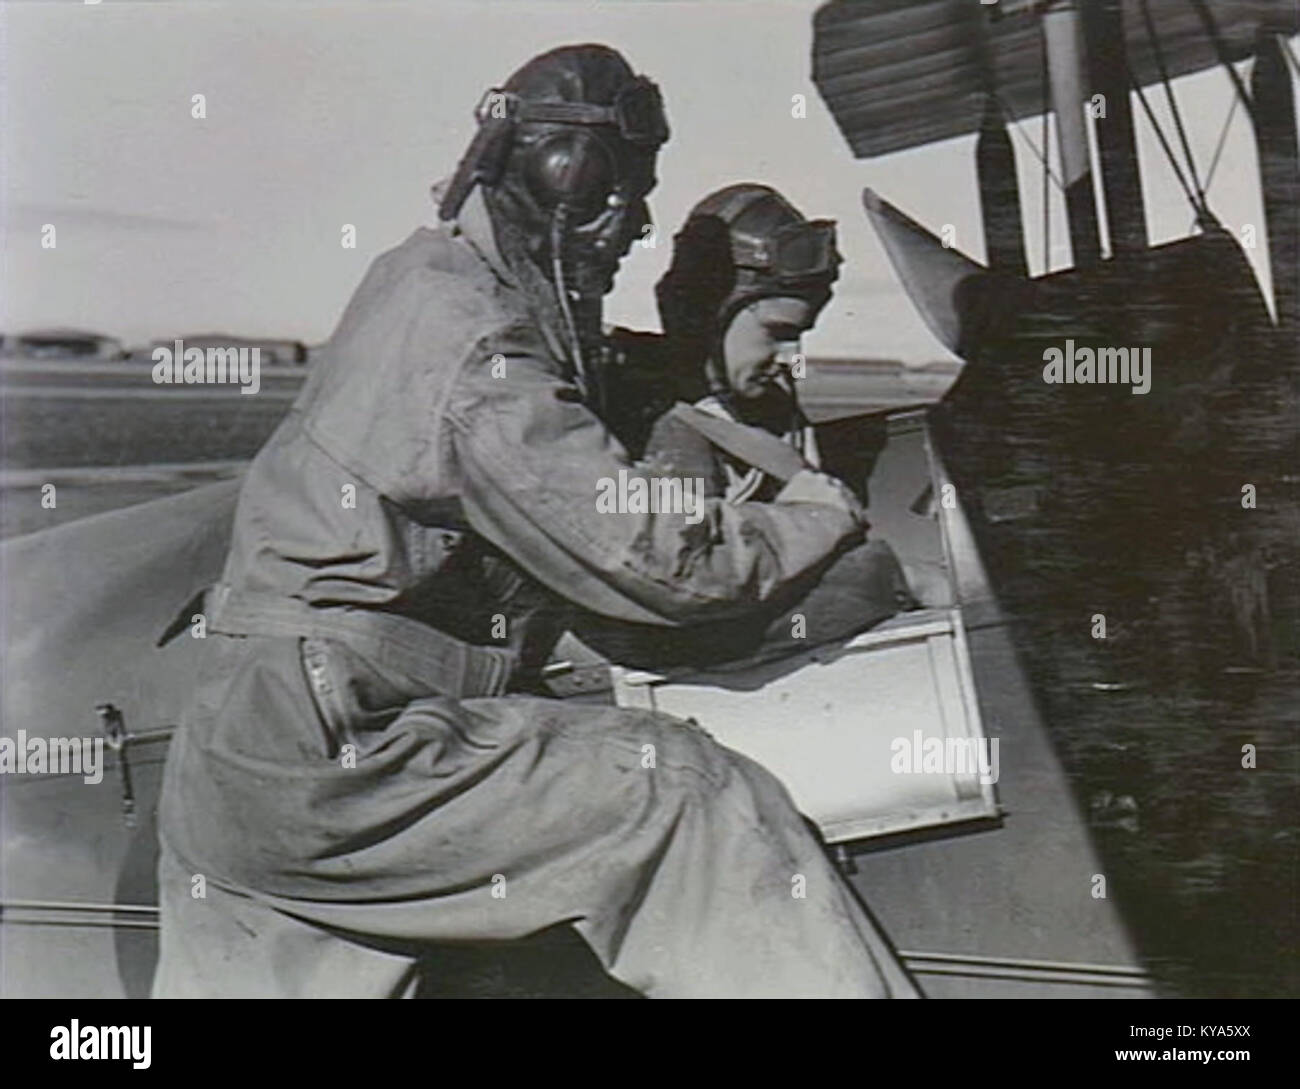 No. 11 EFTS RAAF pilots (AWM VIC1984) Stock Photo